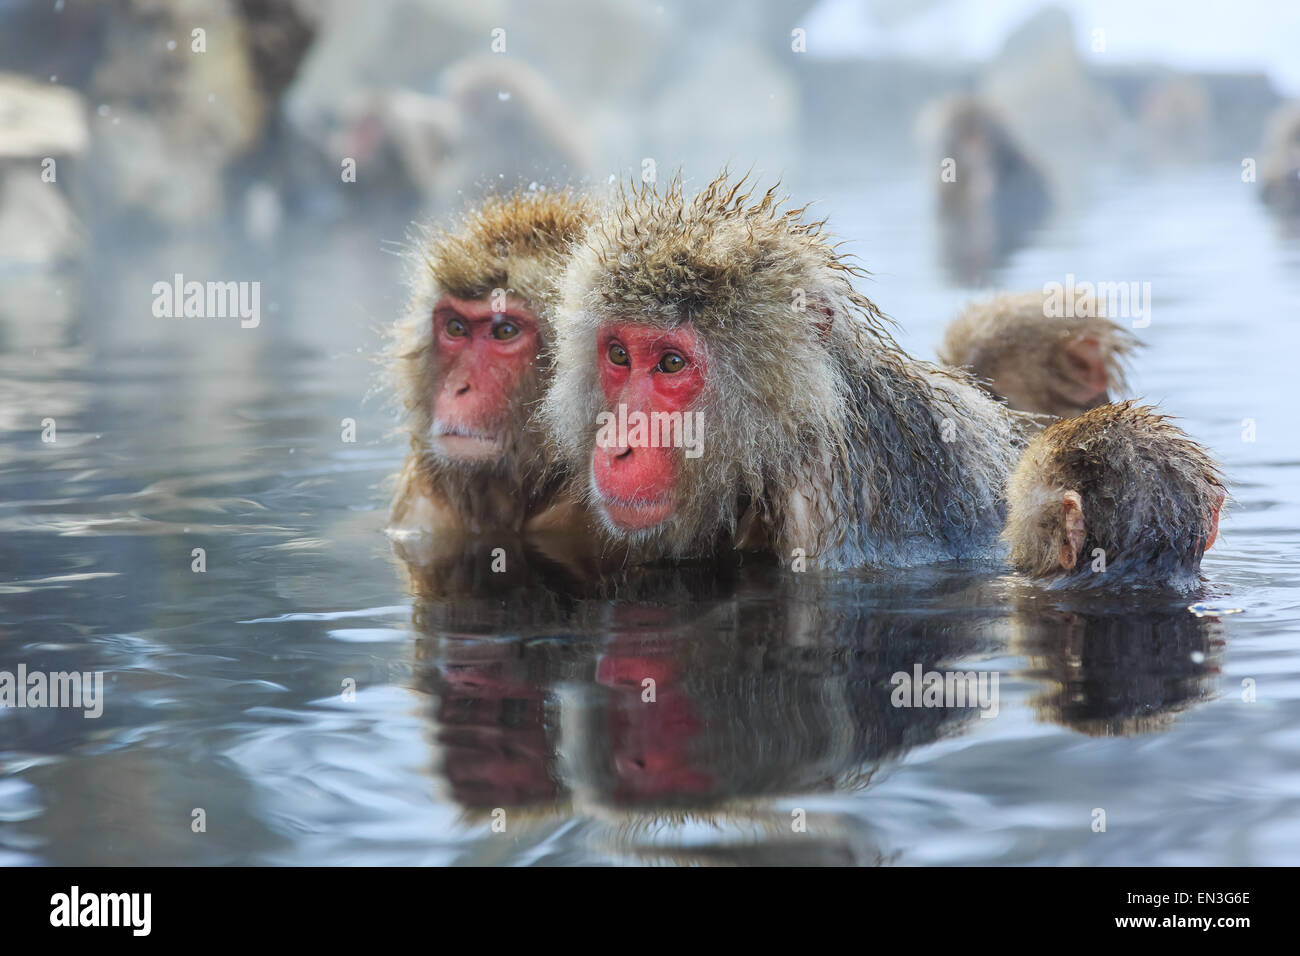 Snow monkeys in a natural onsen (hot spring), located in Jigokudani Park, Yudanaka. Nagano Japan. Stock Photo